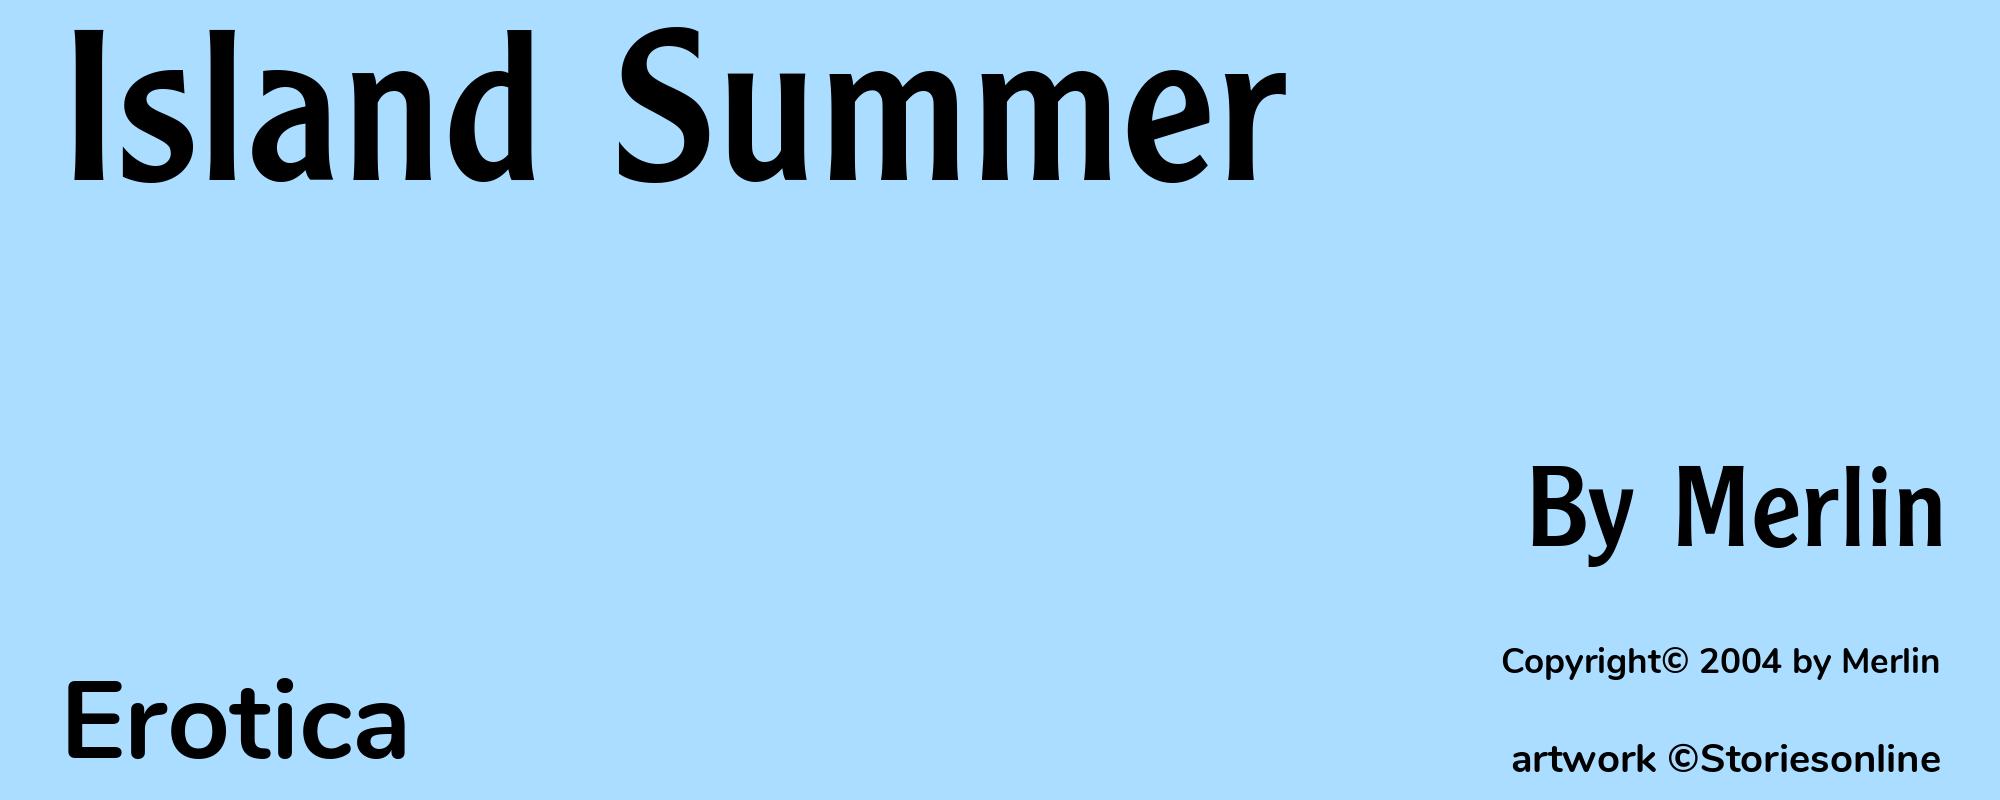 Island Summer - Cover